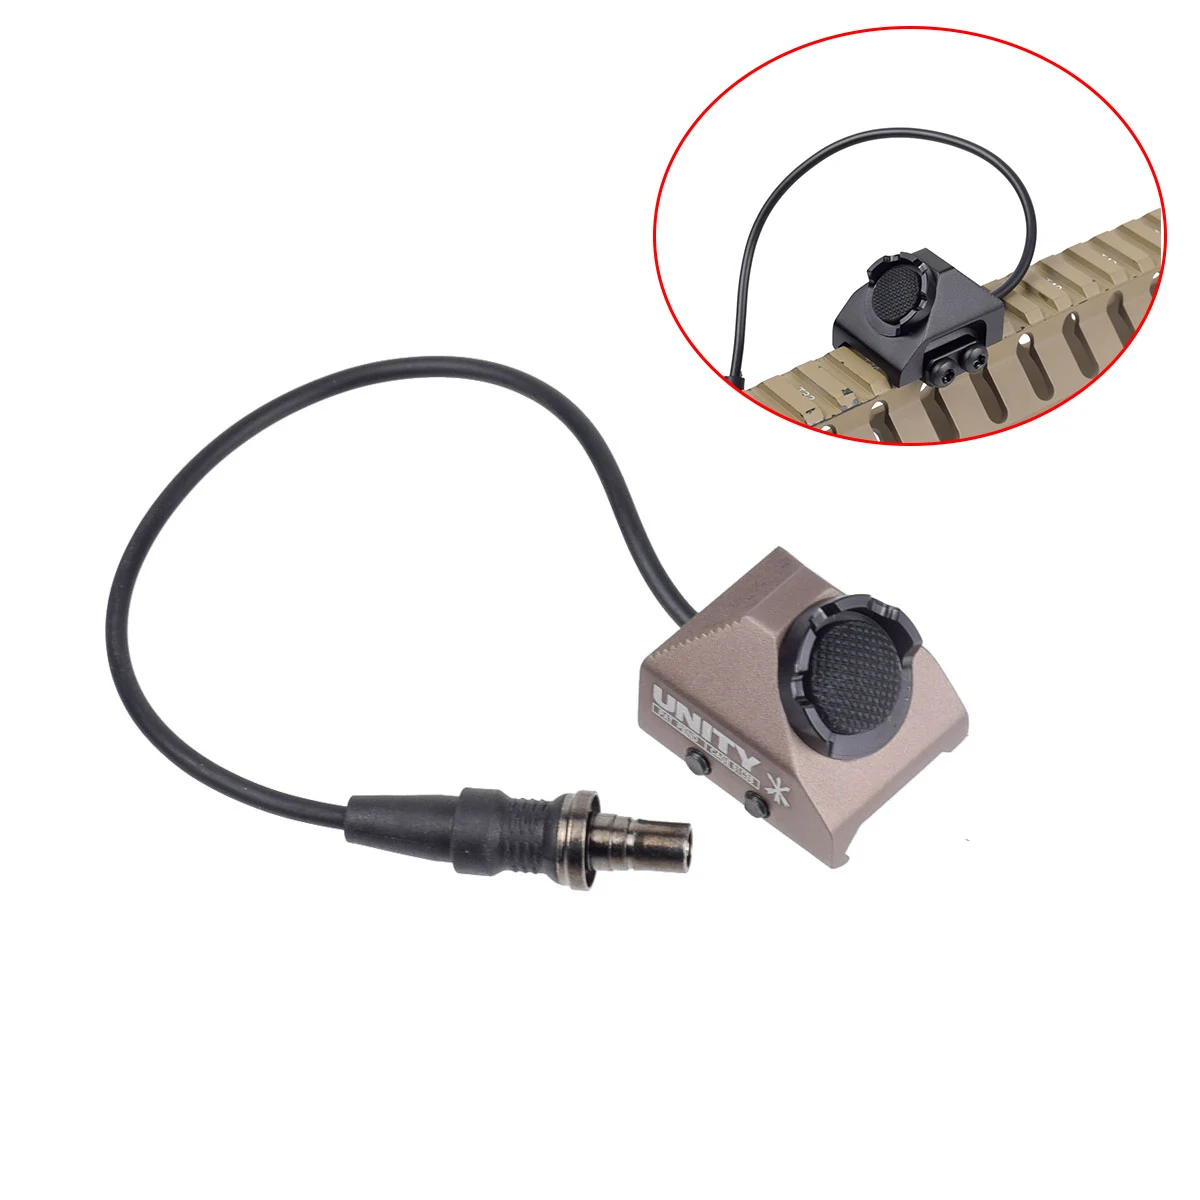 LAMBUL Tactical UN Hot Button Pressure Remote Switch Fit Mlok Keymod 20mm Rail For M300B M600B M600DF Light Constant Control